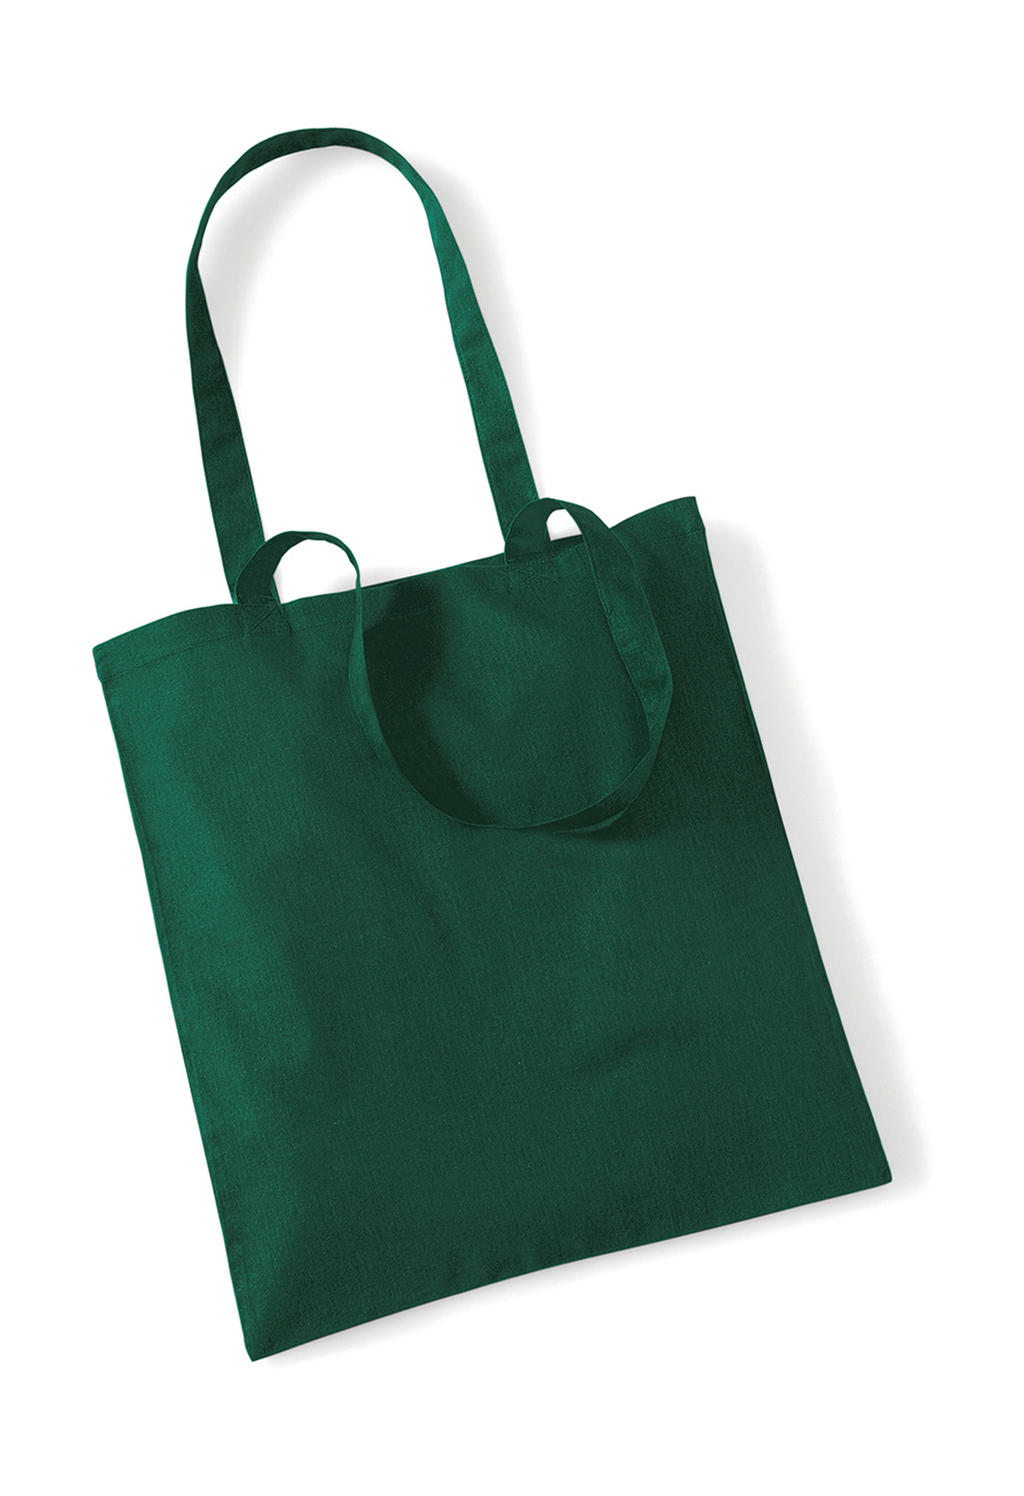  Bag for Life - Long Handles in Farbe Bottle Green